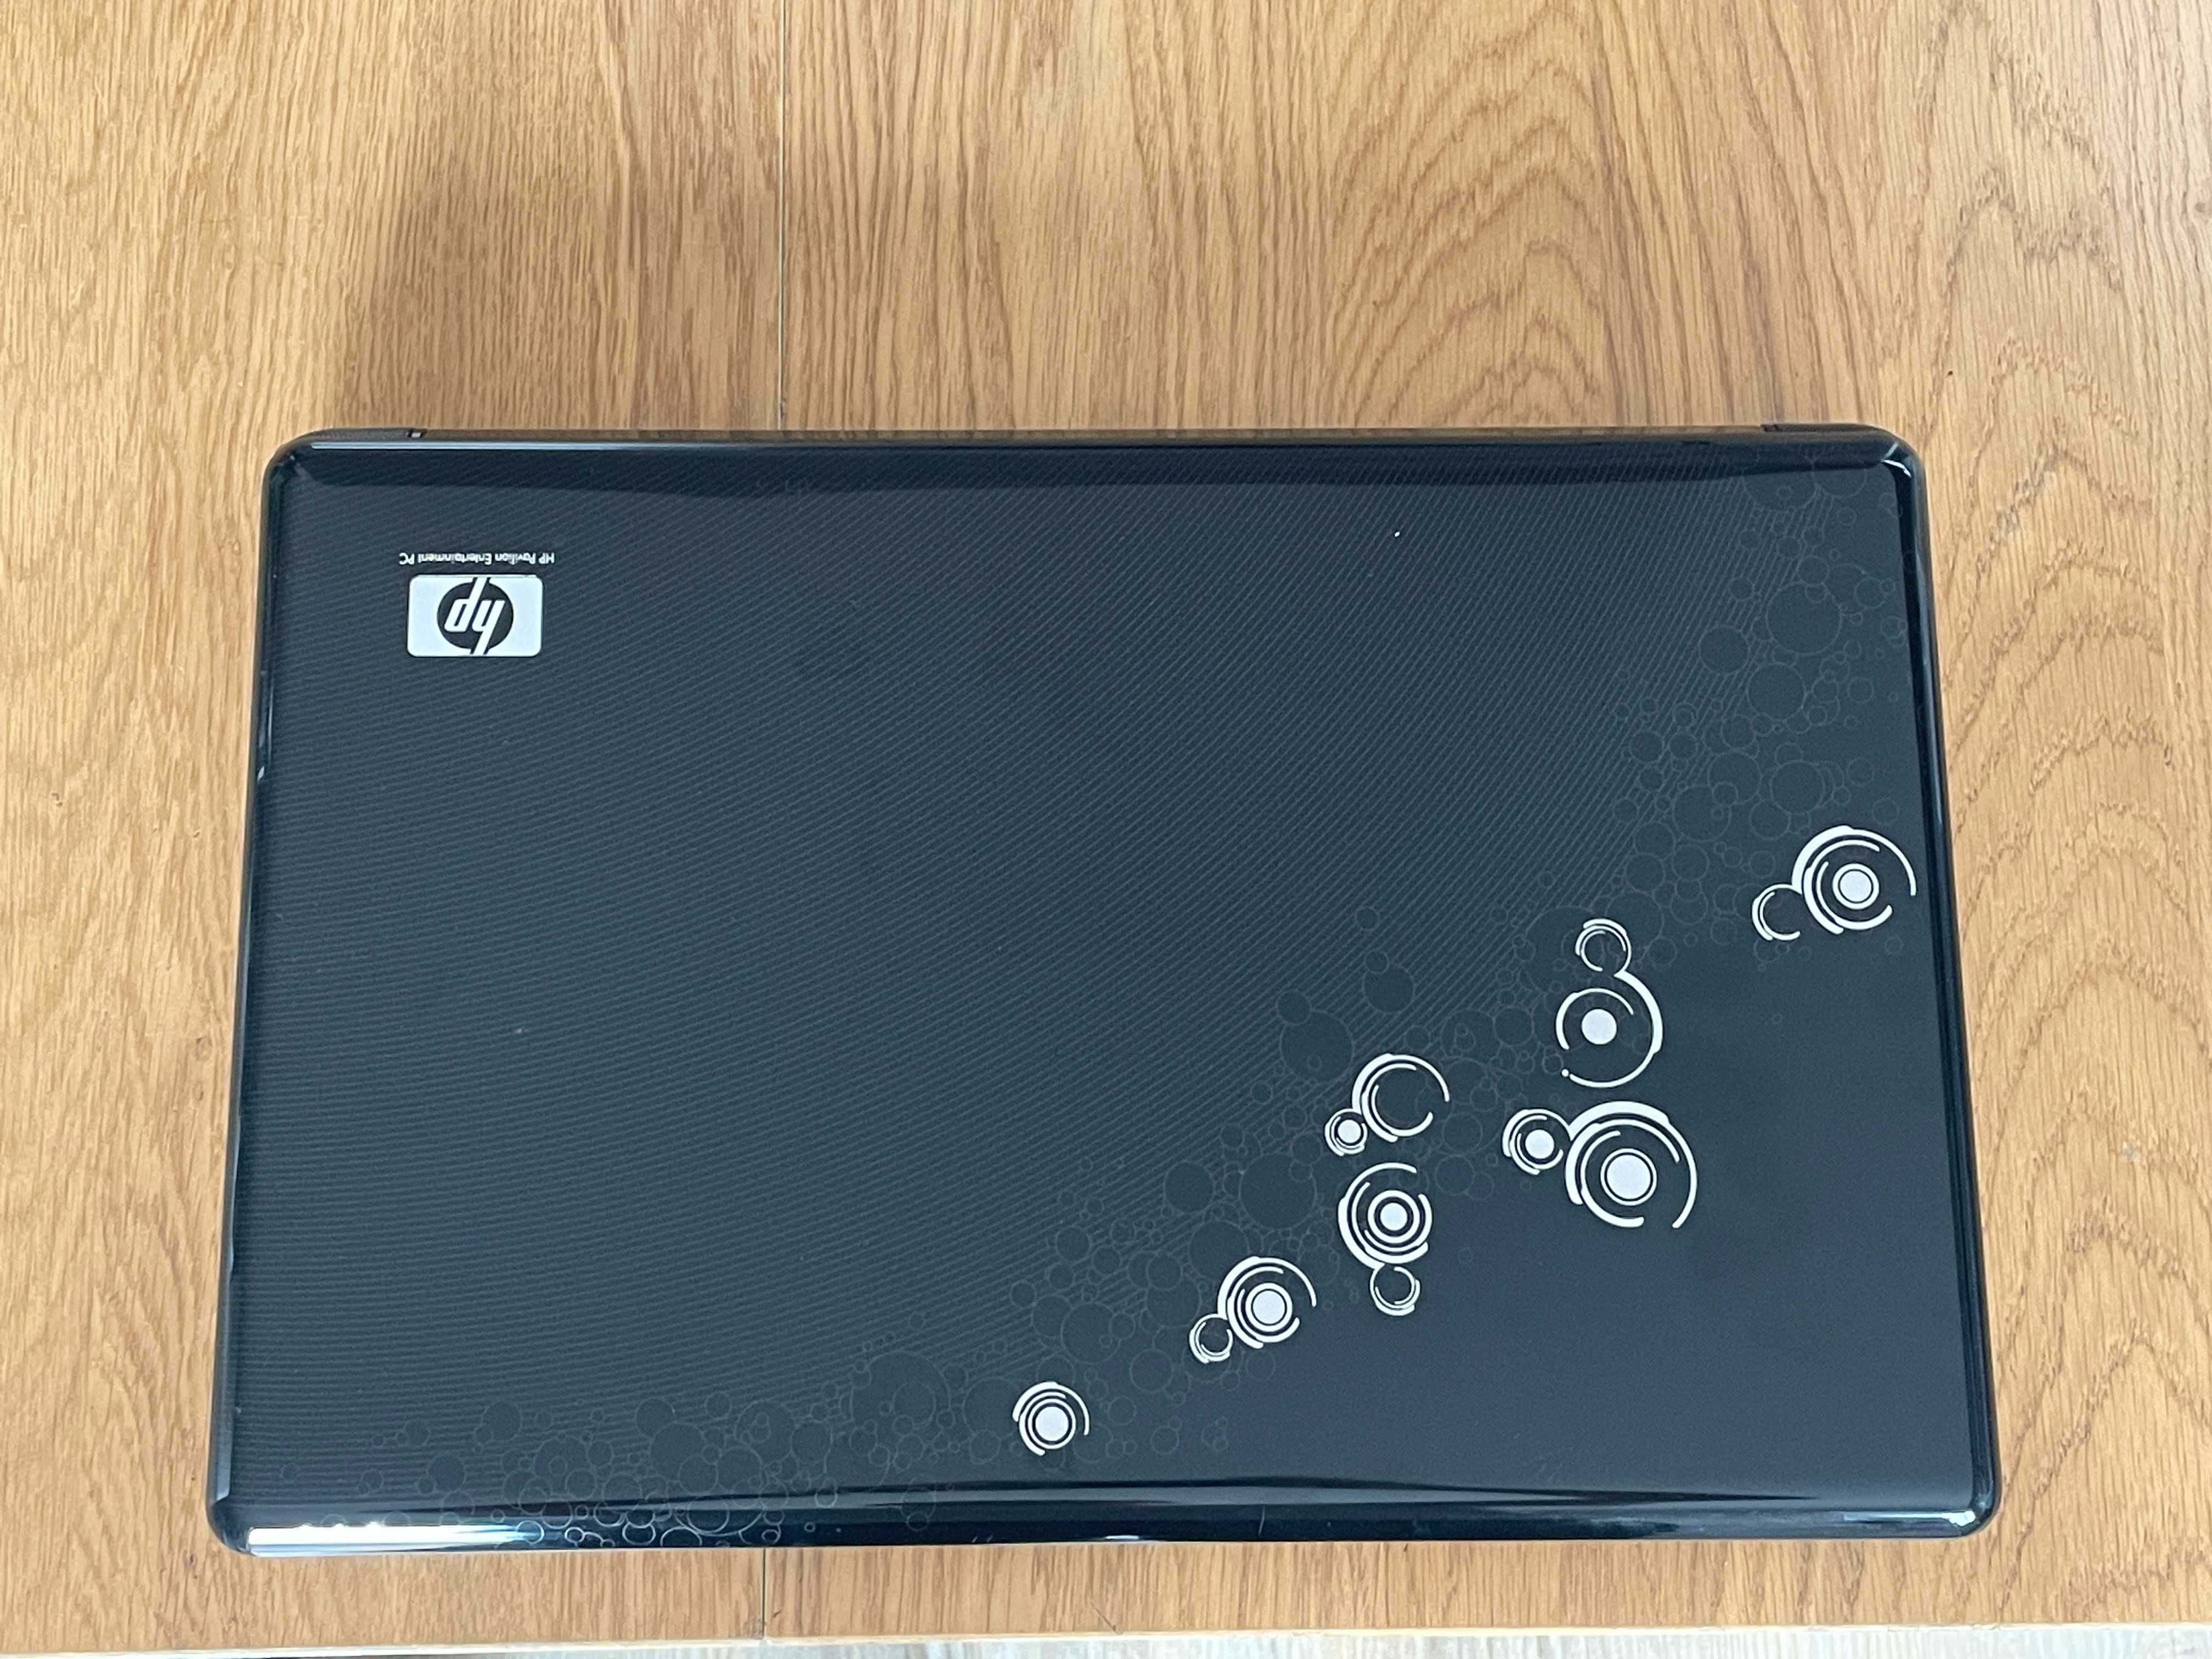 Laptop HP DV7 17" Ati Radeon